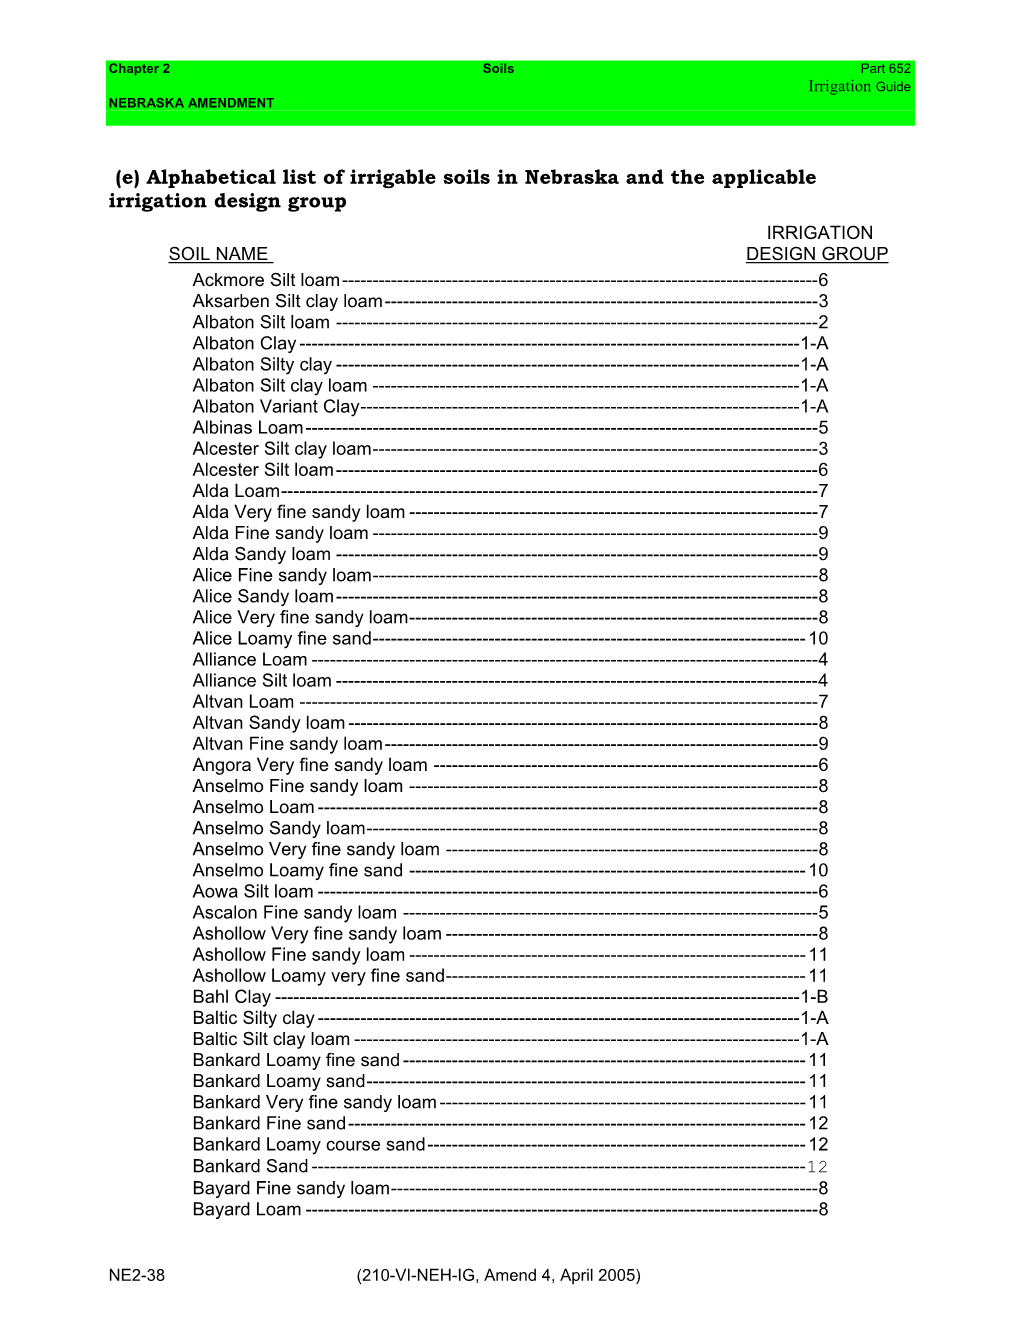 (E) Alphabetical List of Irrigable Soils in Nebraska and the Applicable